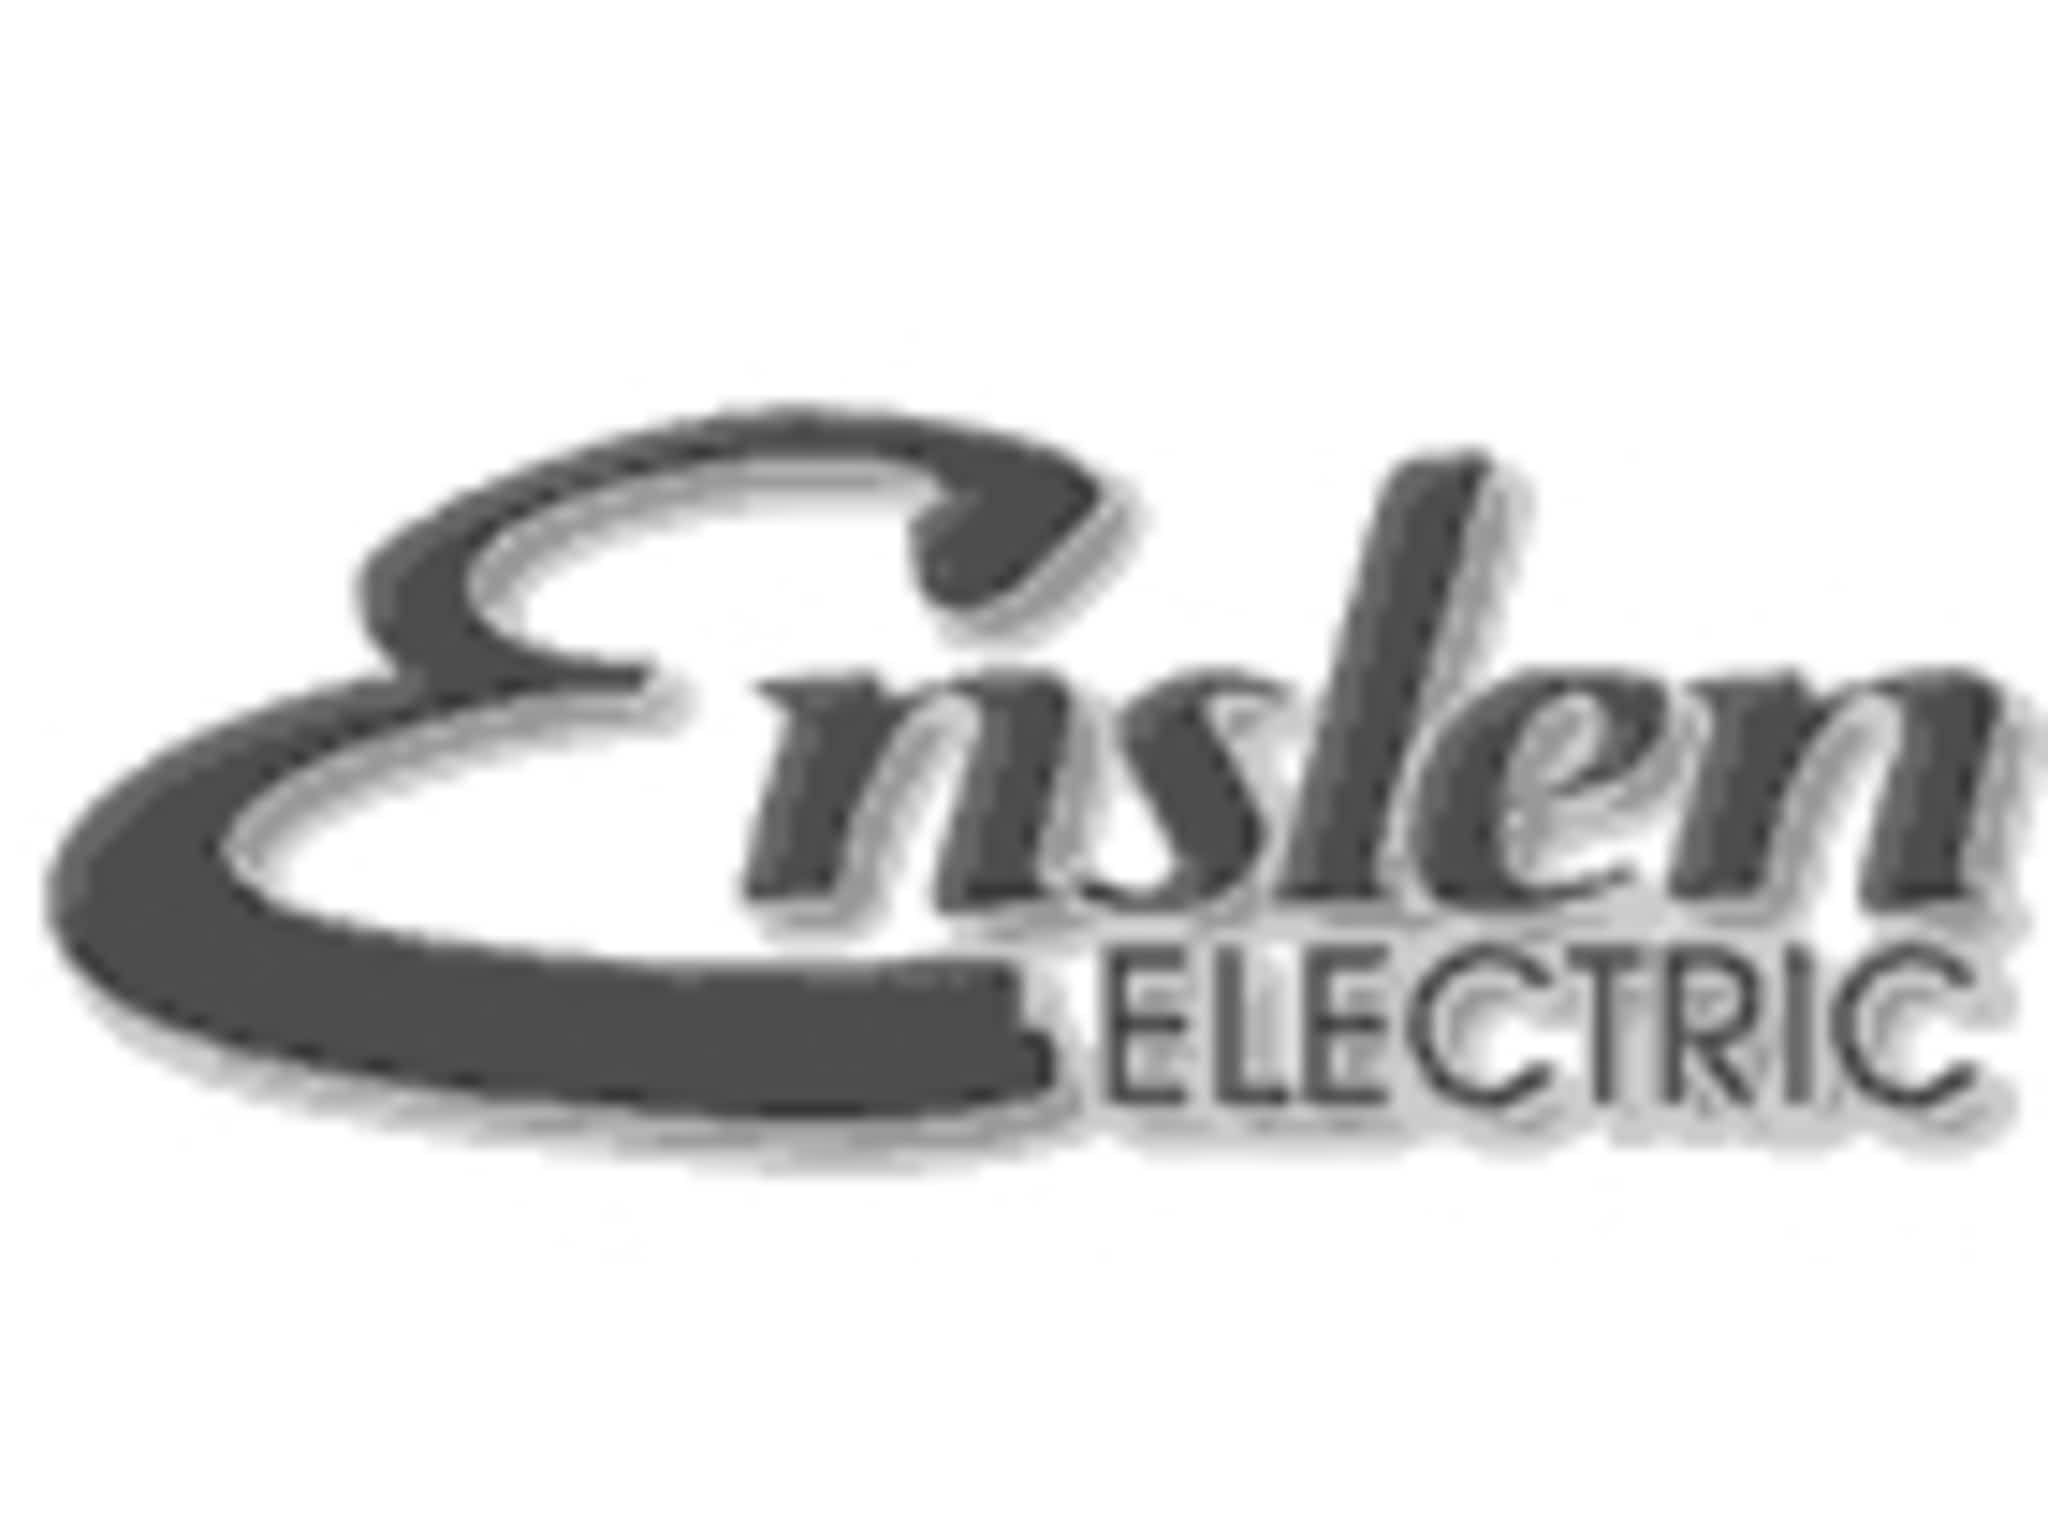 photo Enslen Electric Inc